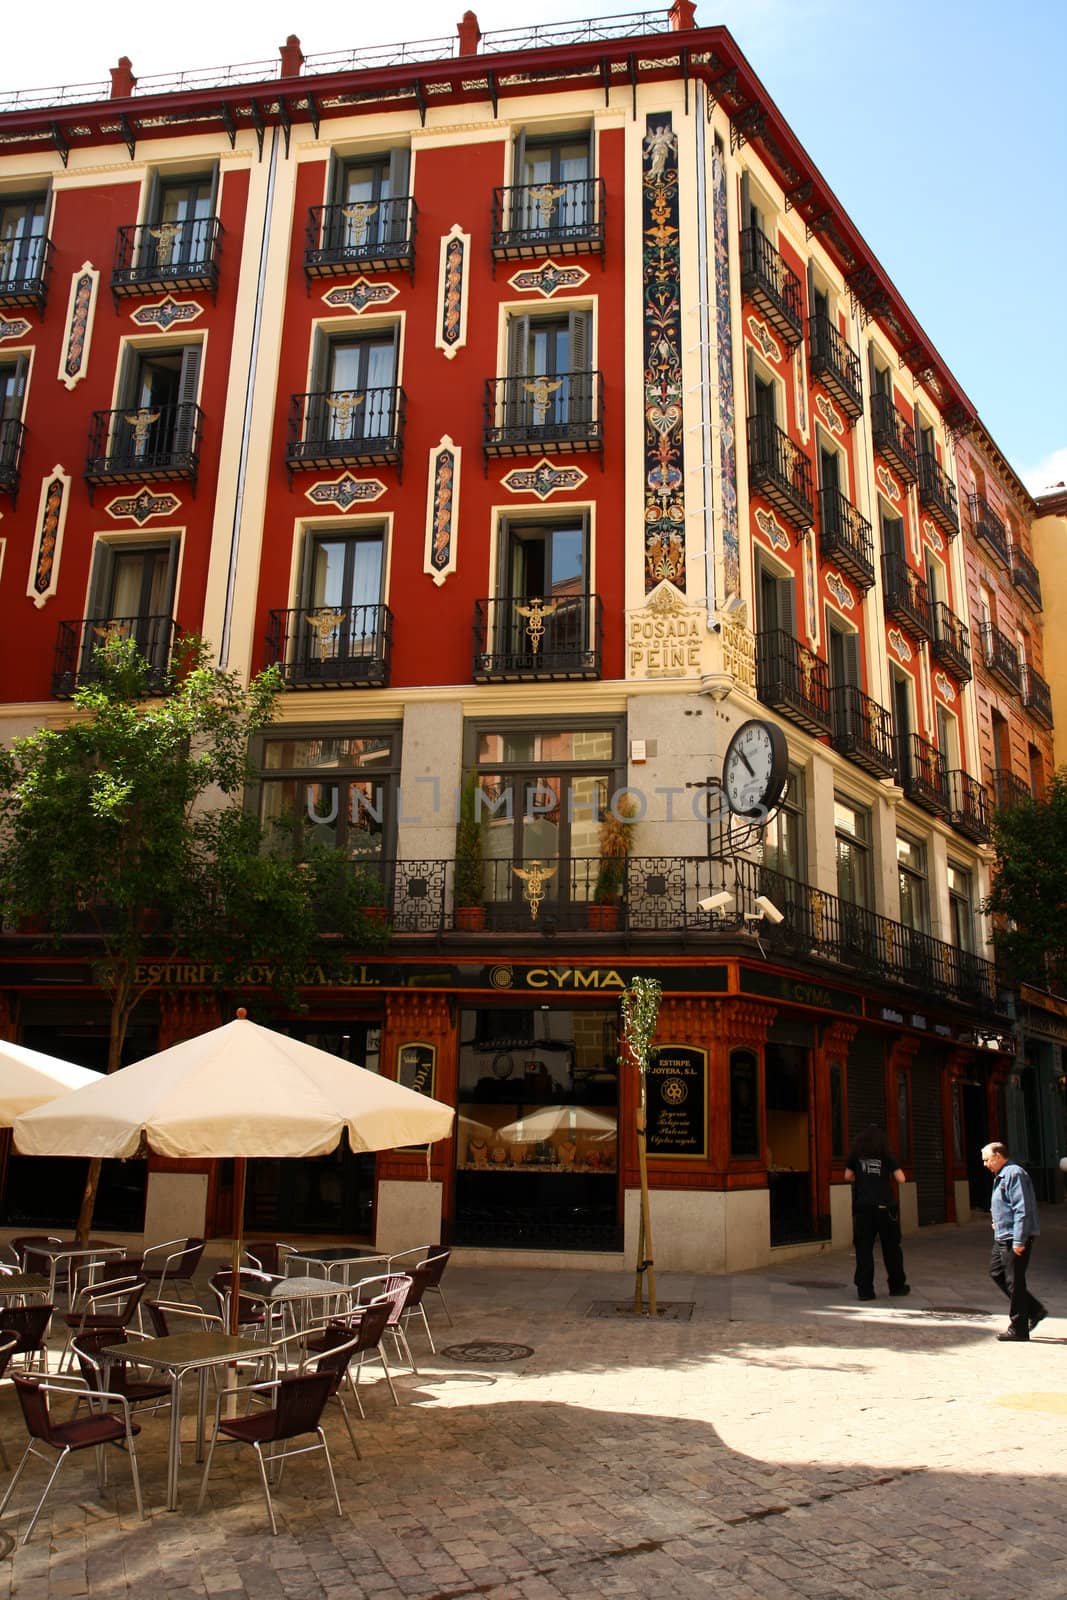 The Posada del Peine building, near the Plaza Mayor, Spain by mrfocus